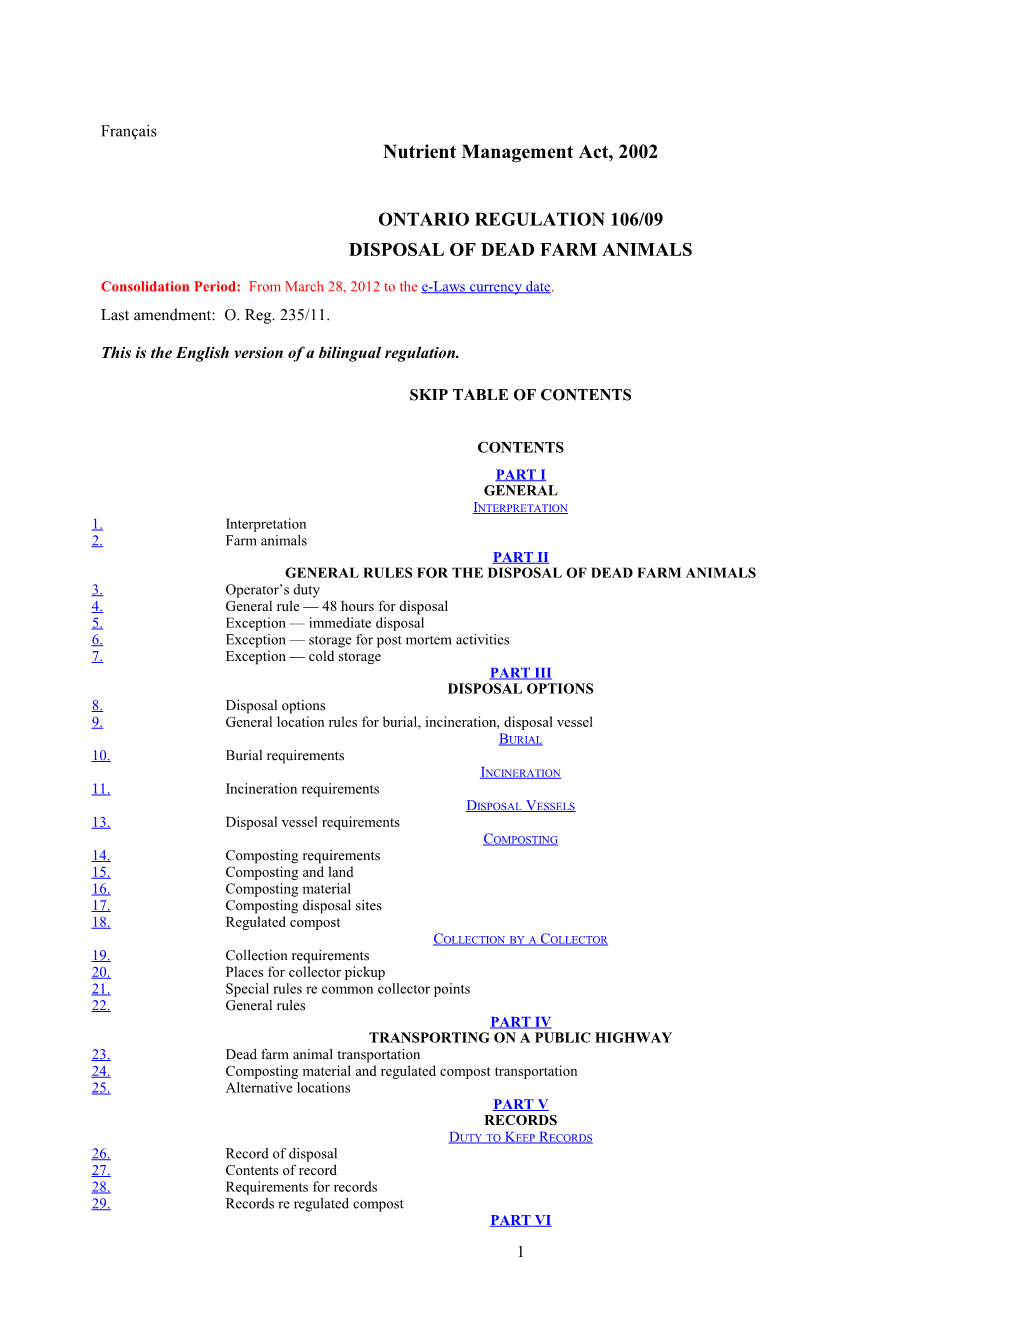 Nutrient Management Act, 2002 - O. Reg. 106/09